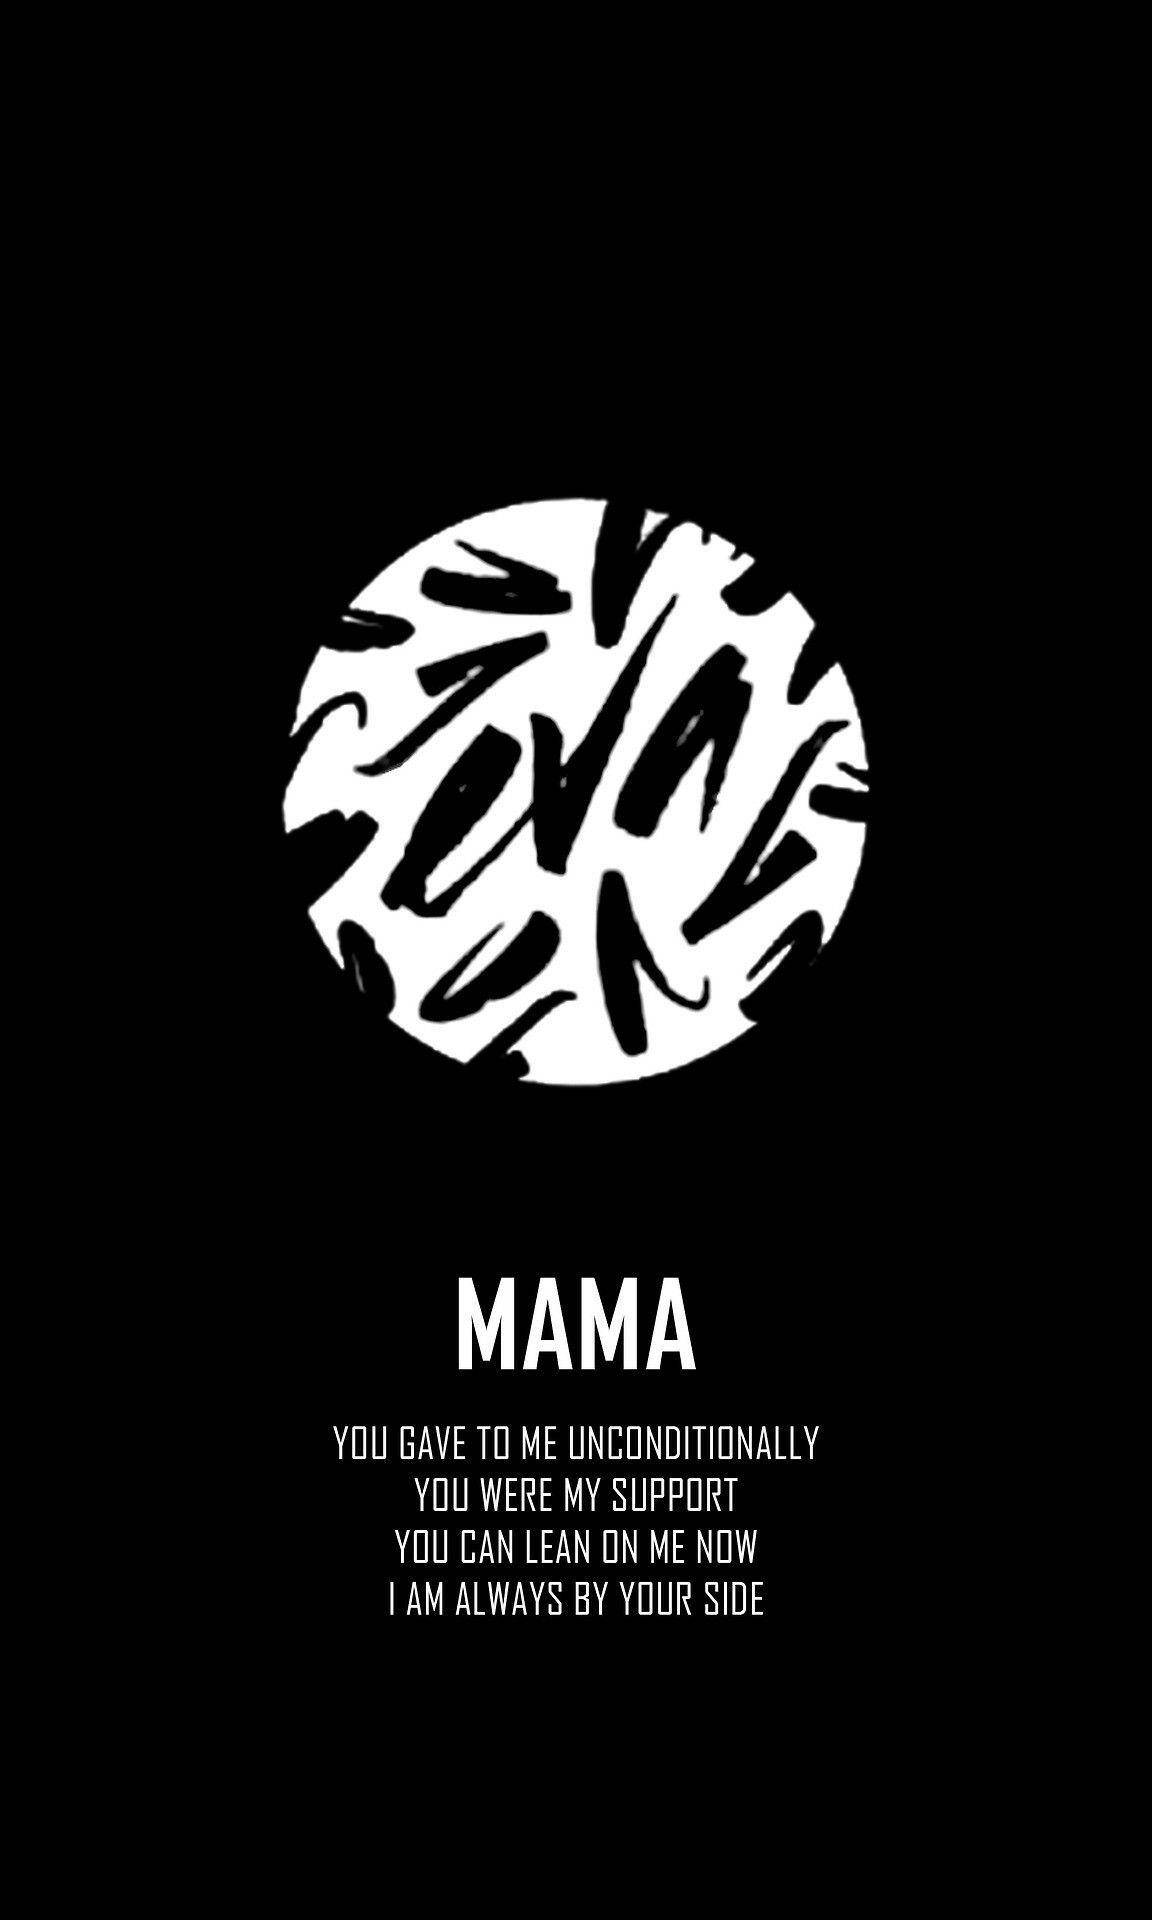 Bts Black Mama Title And Lyrics Wallpaper